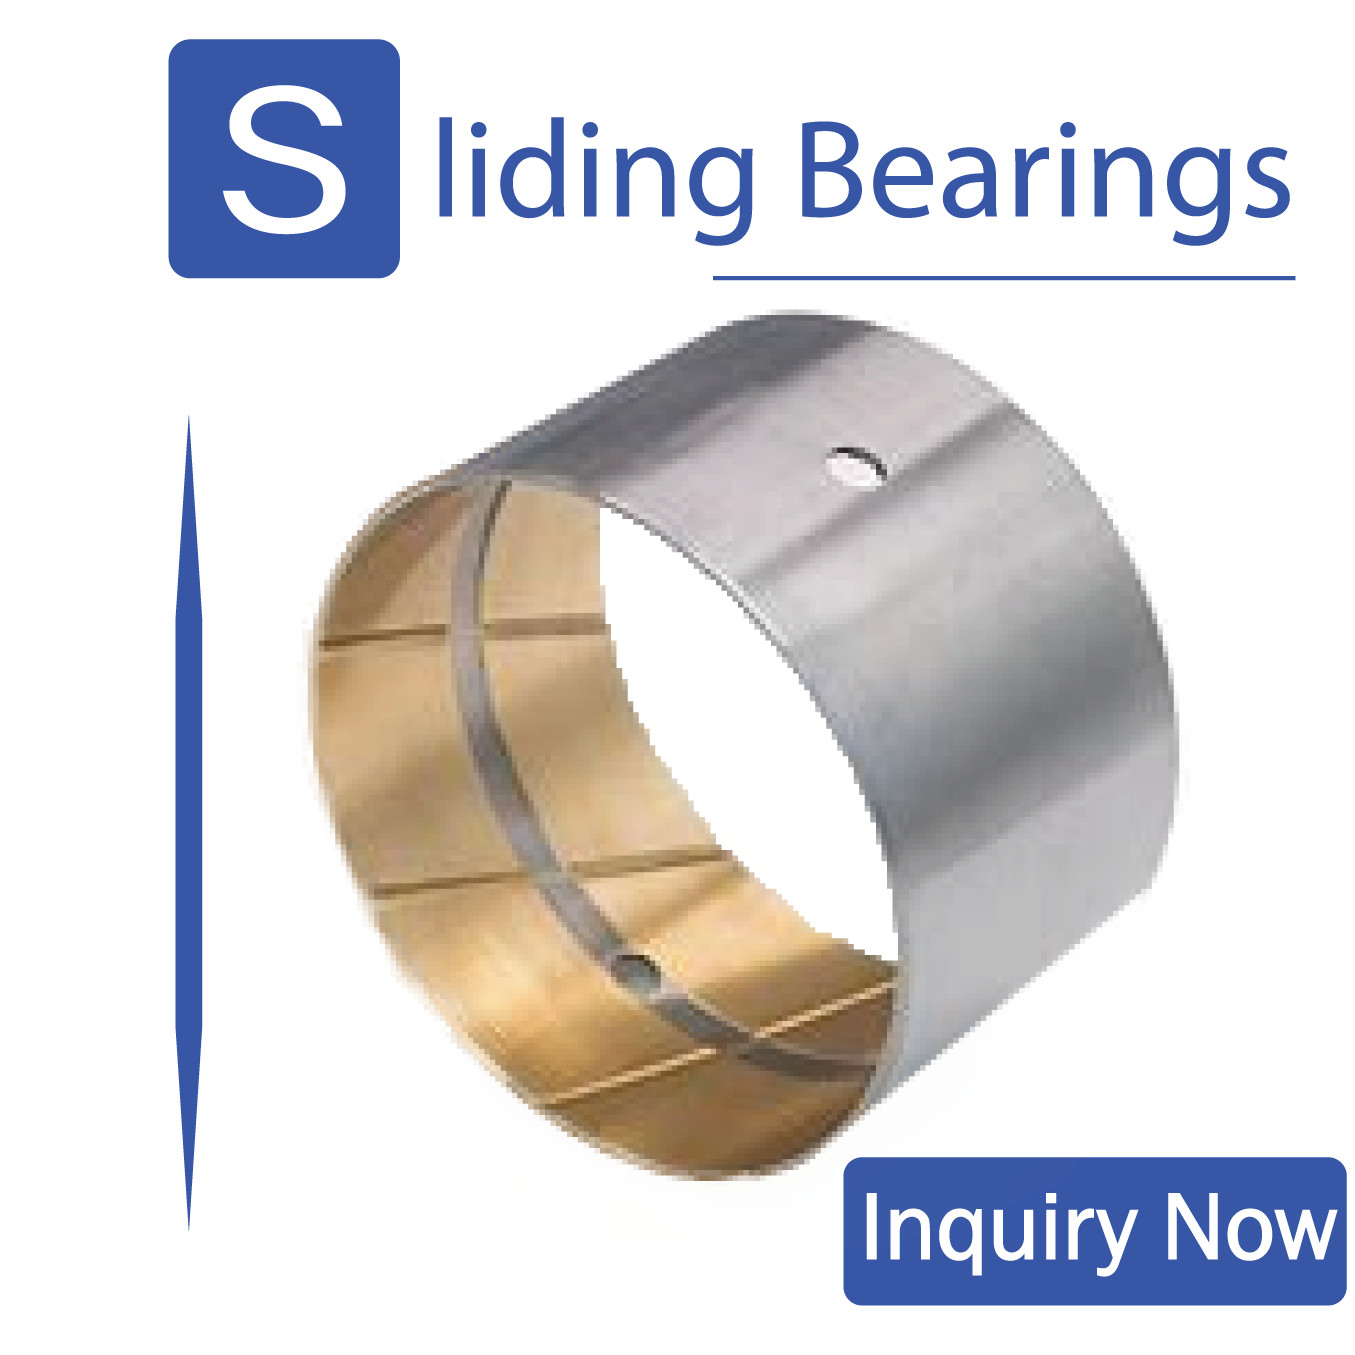 Steel base bimetallic bearing